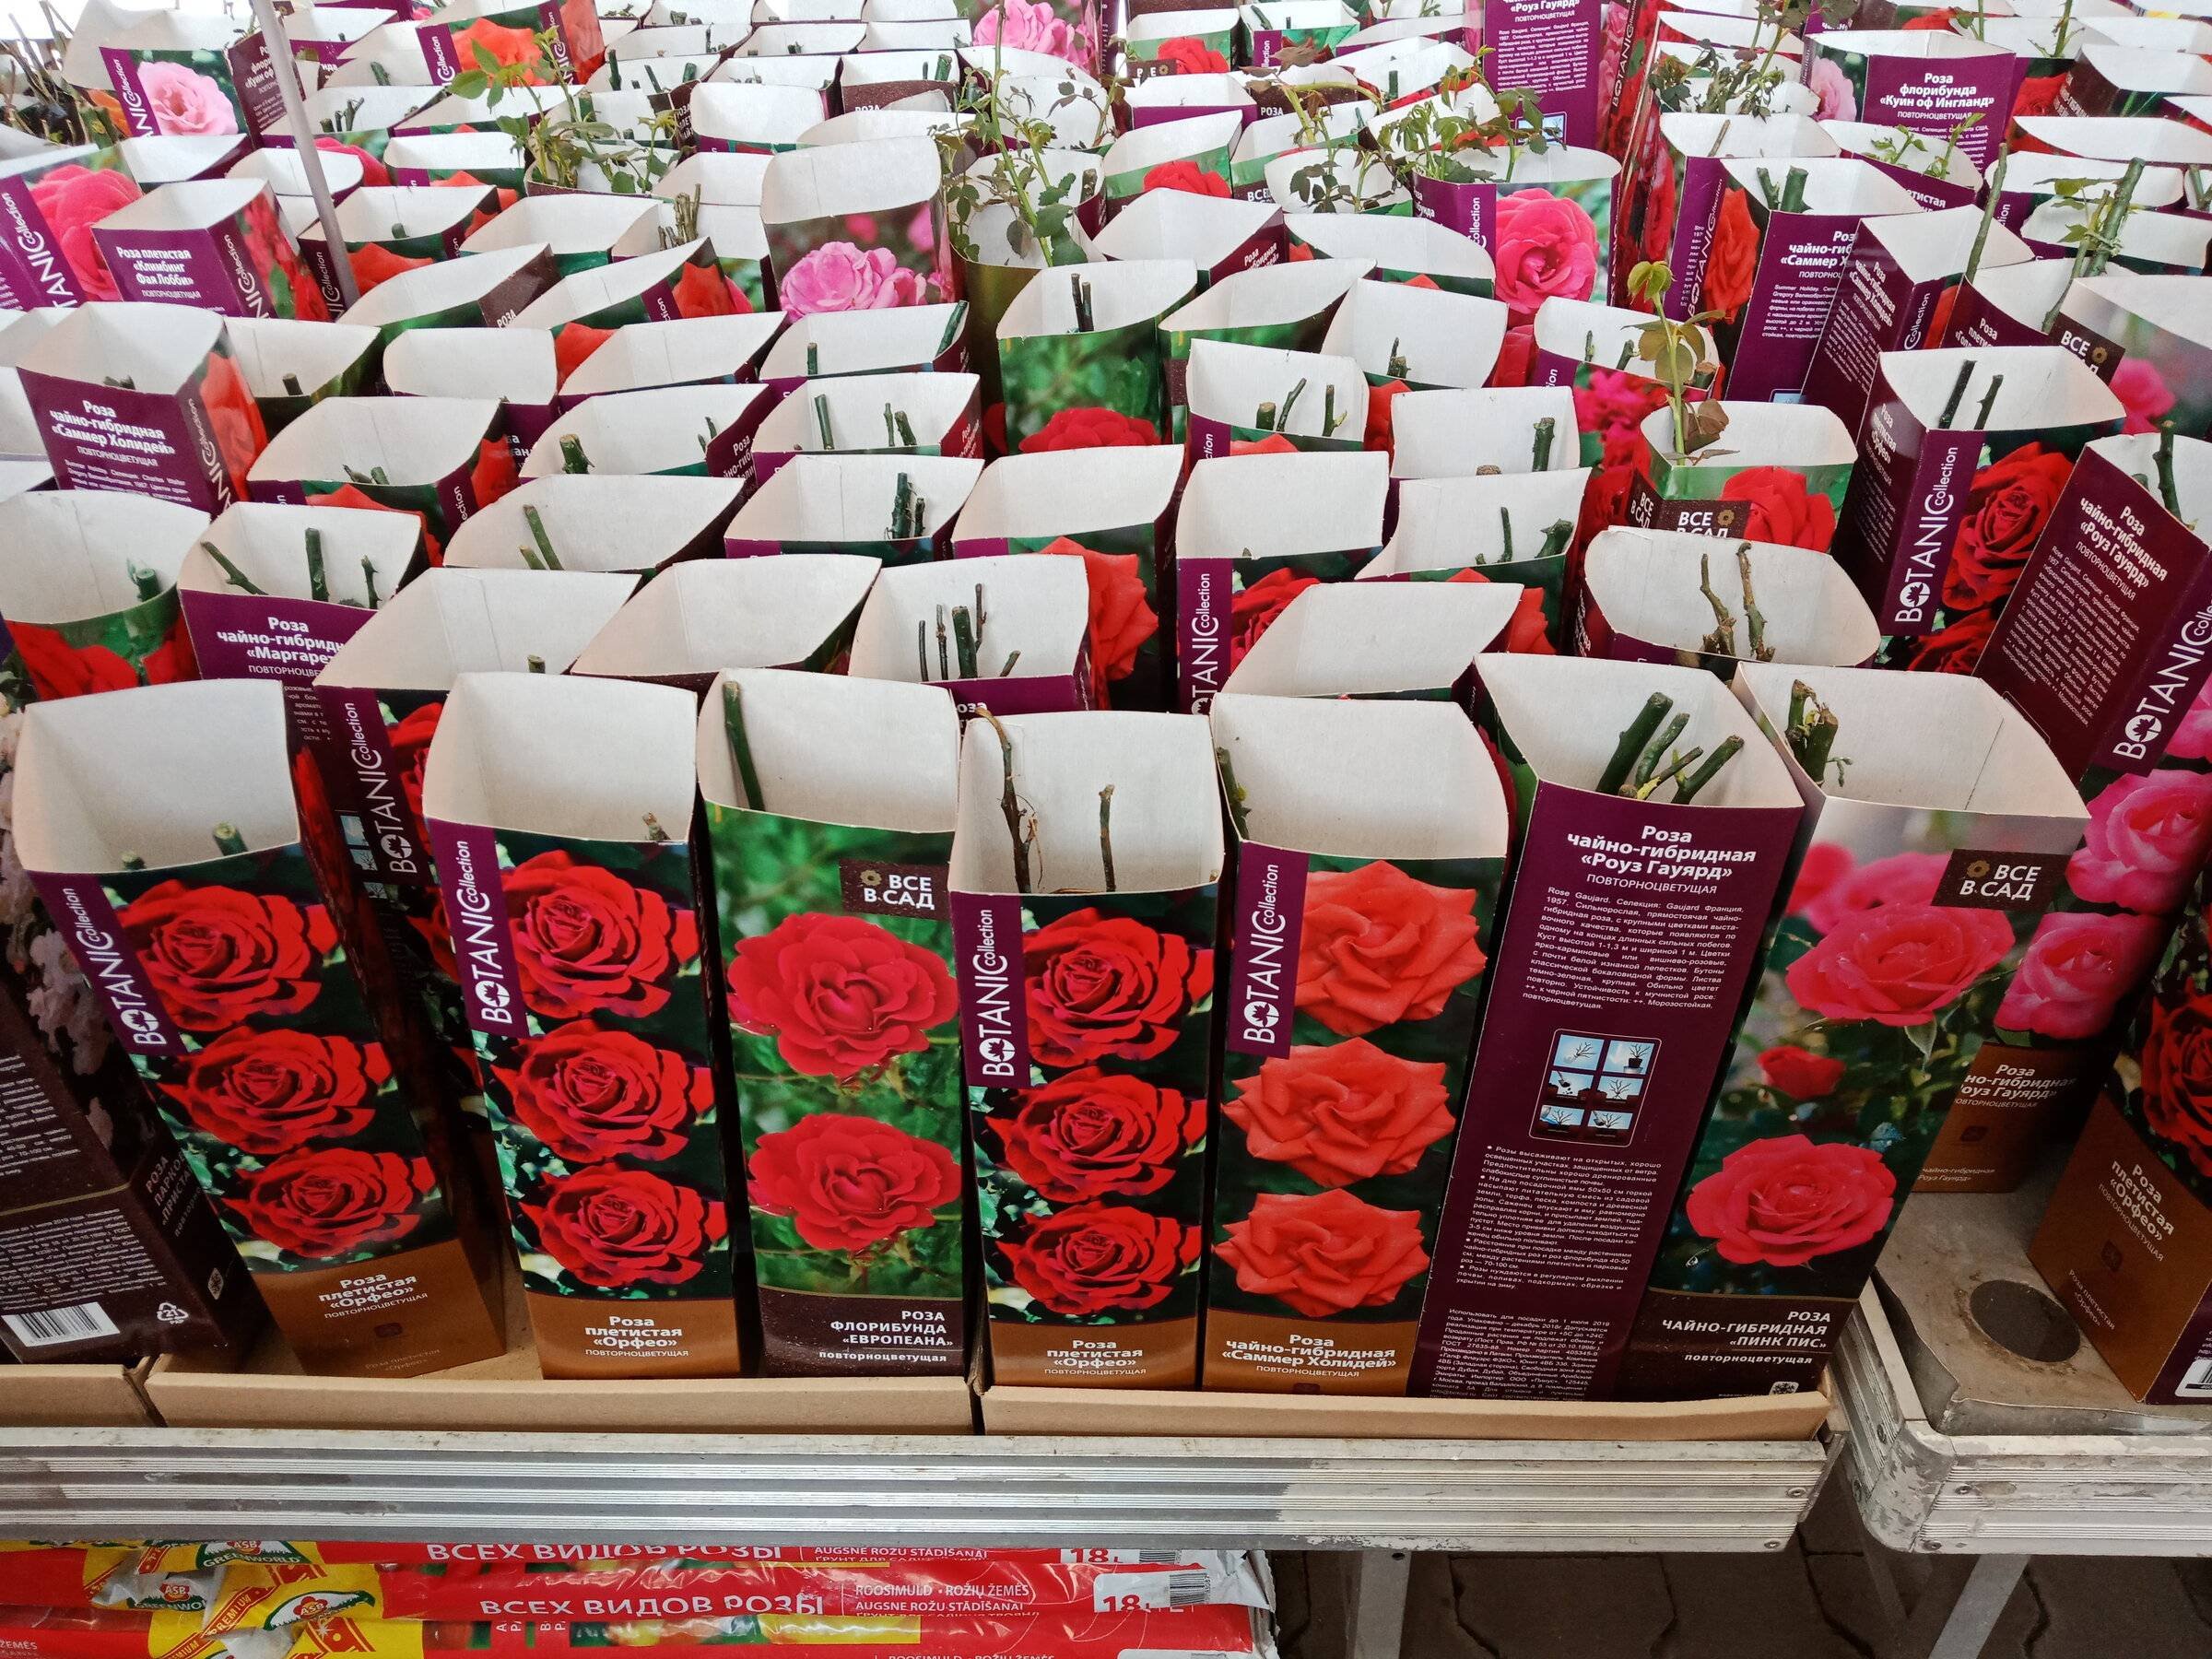 Красное саженцы роз. Саженцы роз в коробках. Рассада роз. Саженцы роз в Ашане. Сажгняы роз в коробочках в магазине.